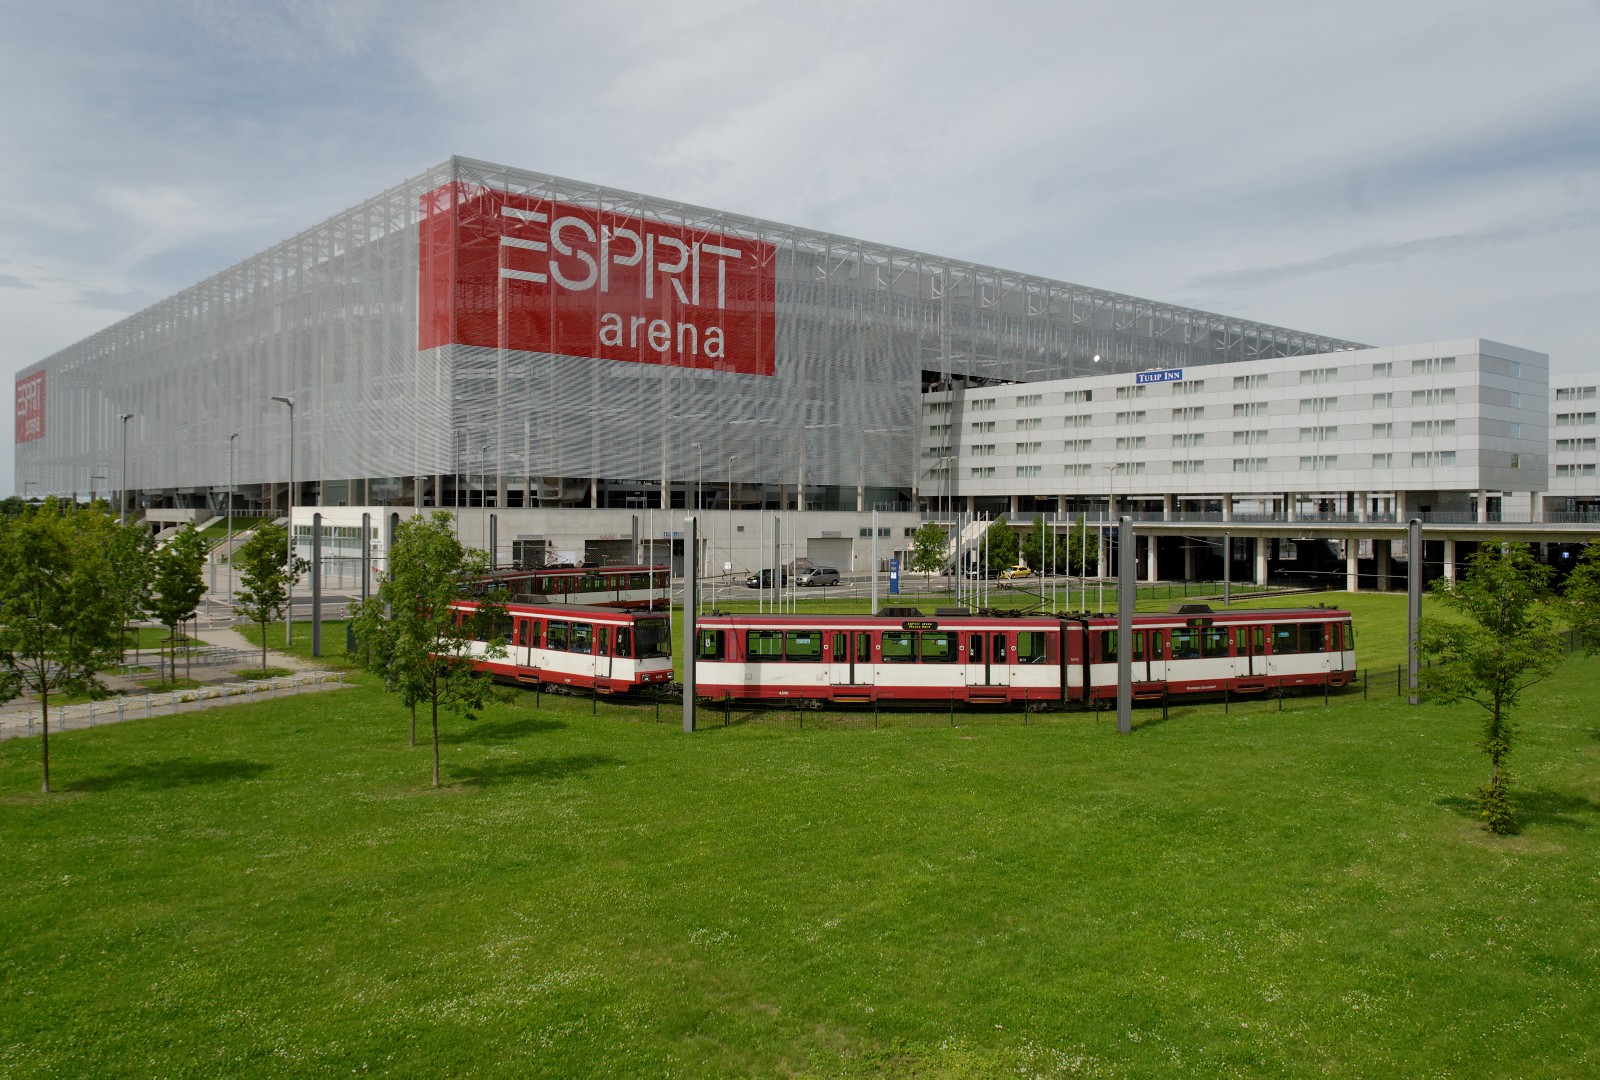 ESPRIT Arena in Düsseldorf